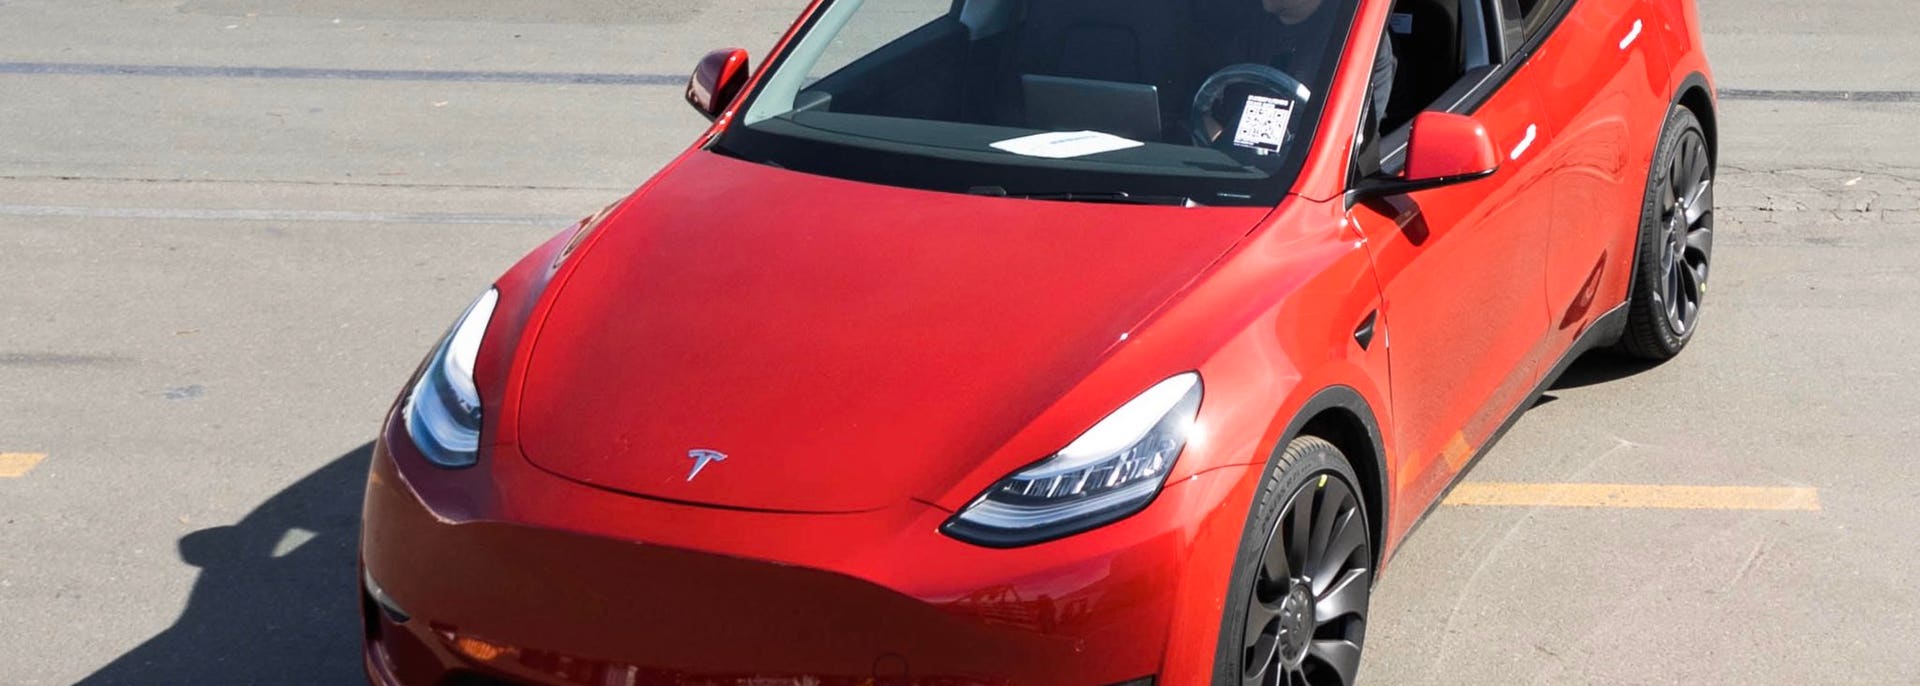 Tesla has built its 1 millionth car, Musk says | Fox News